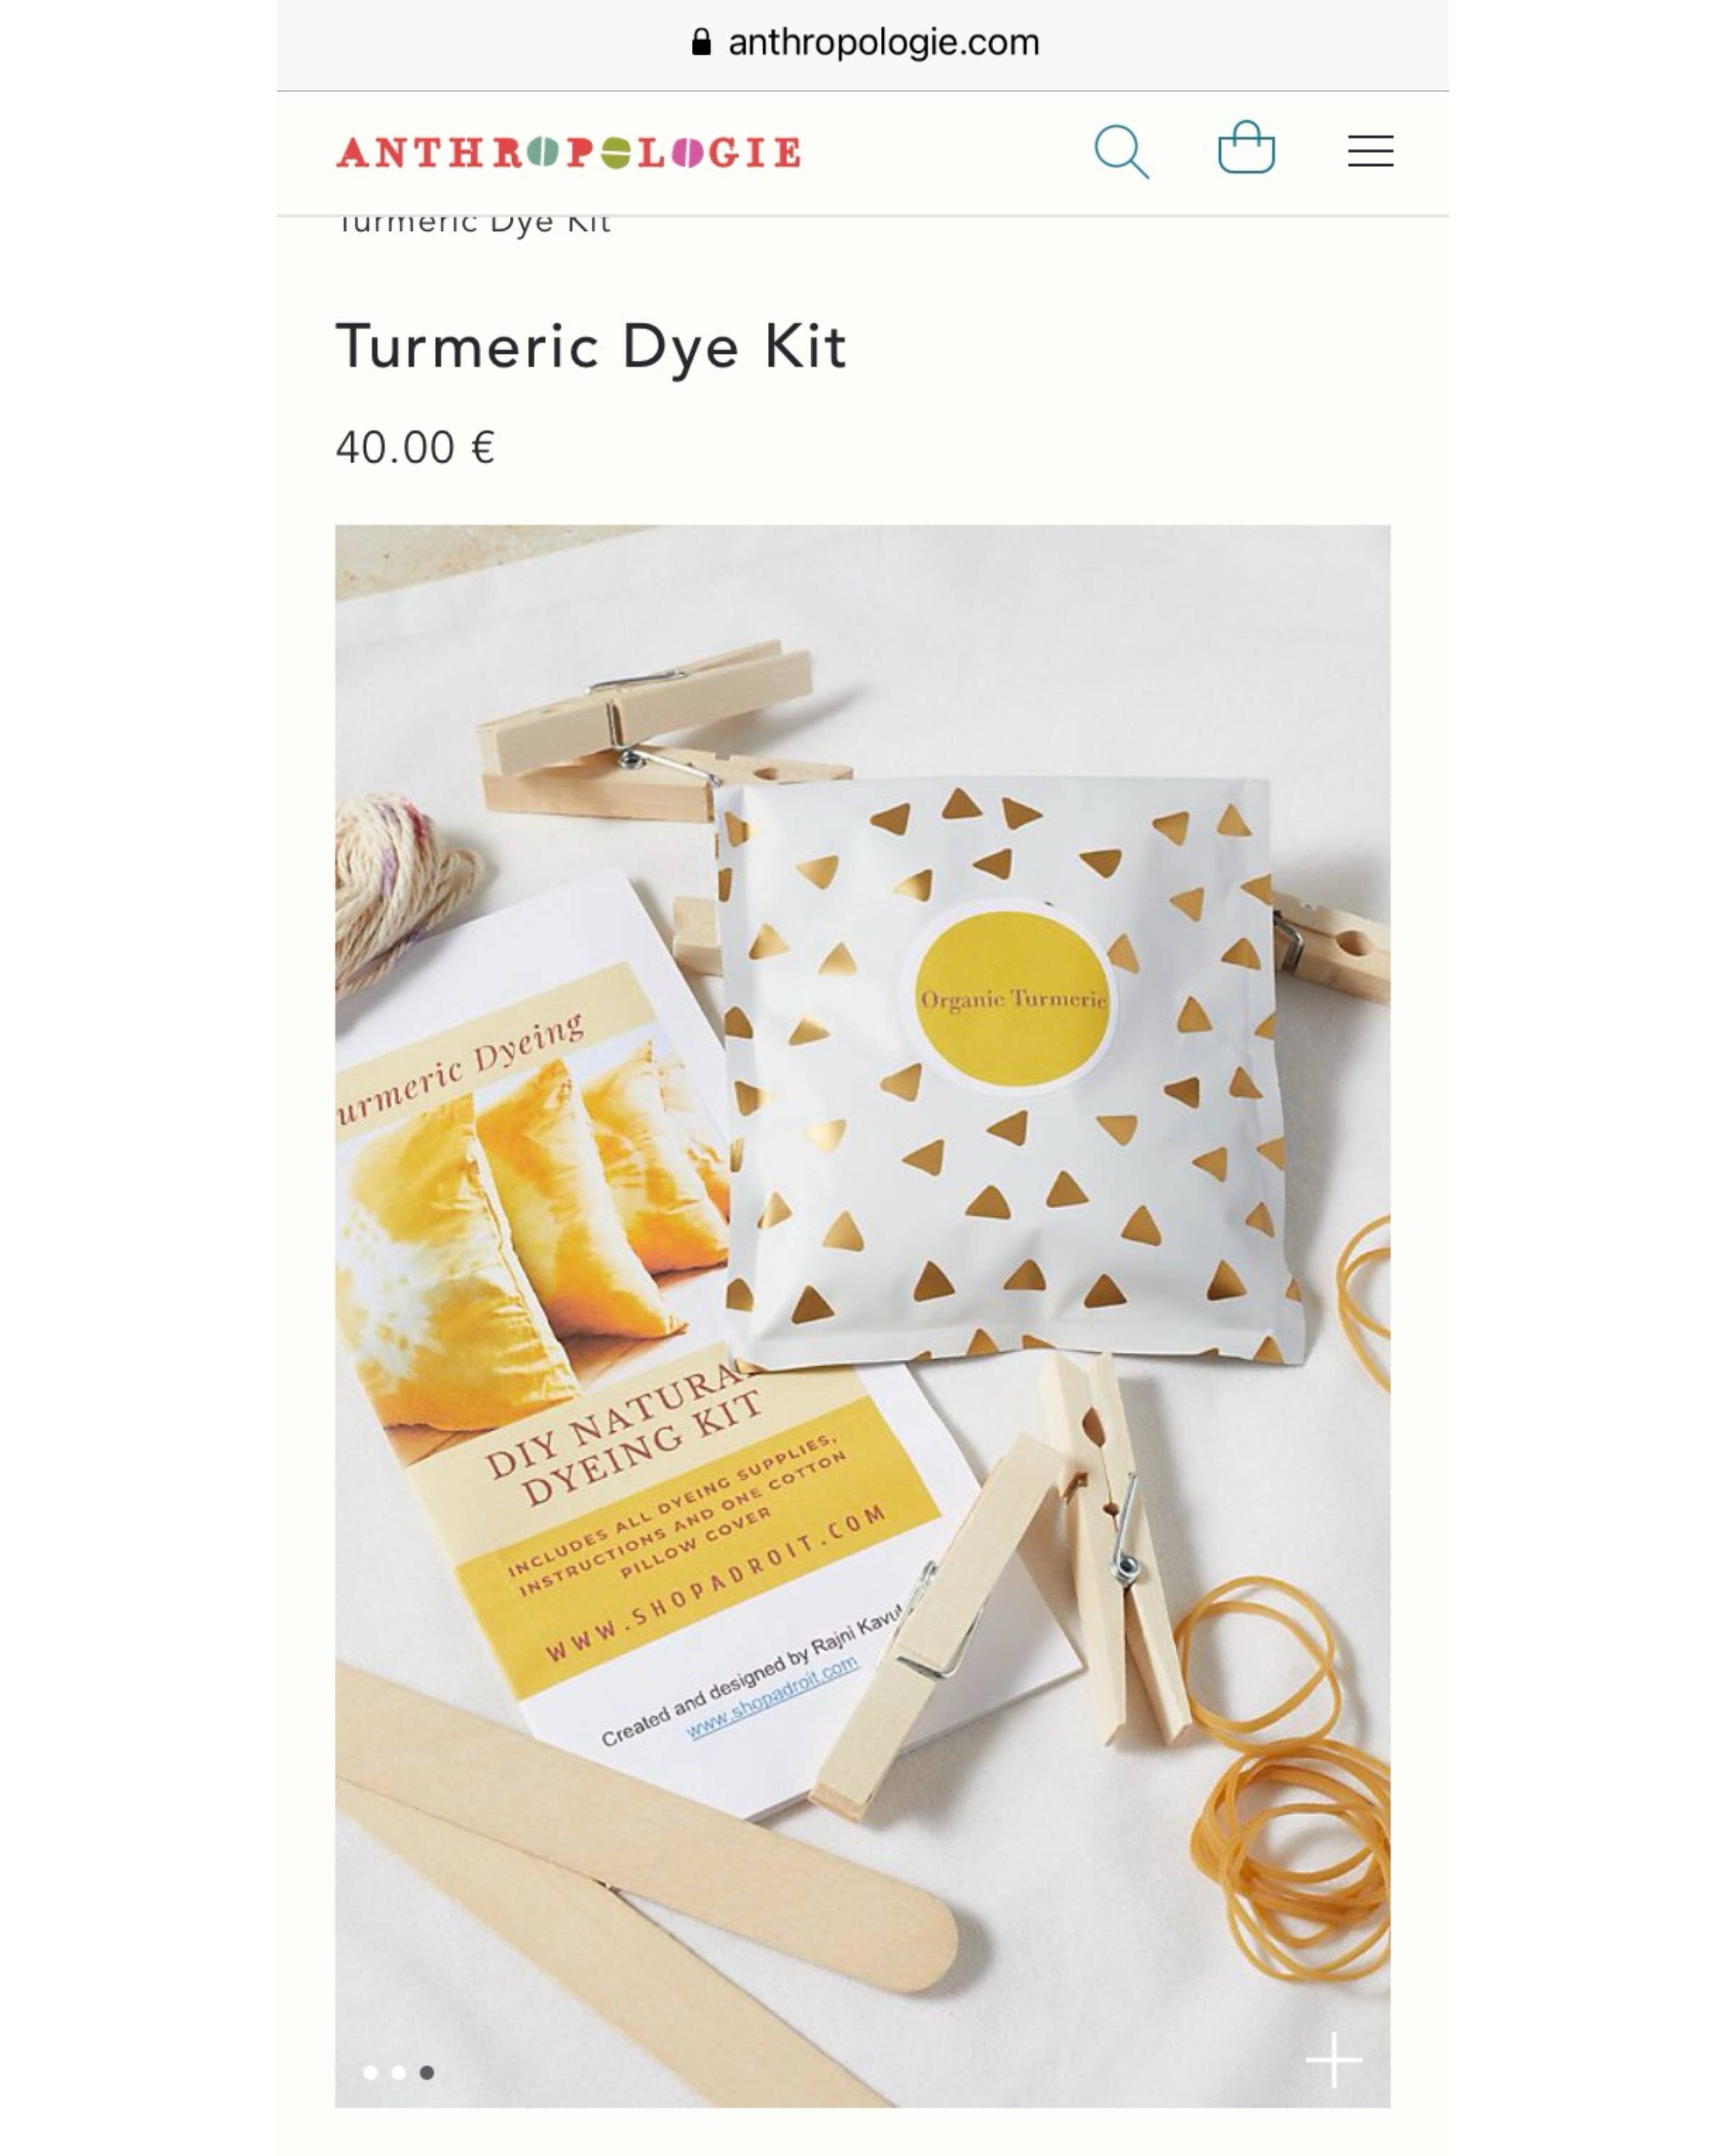 Turmeric Dye Kit